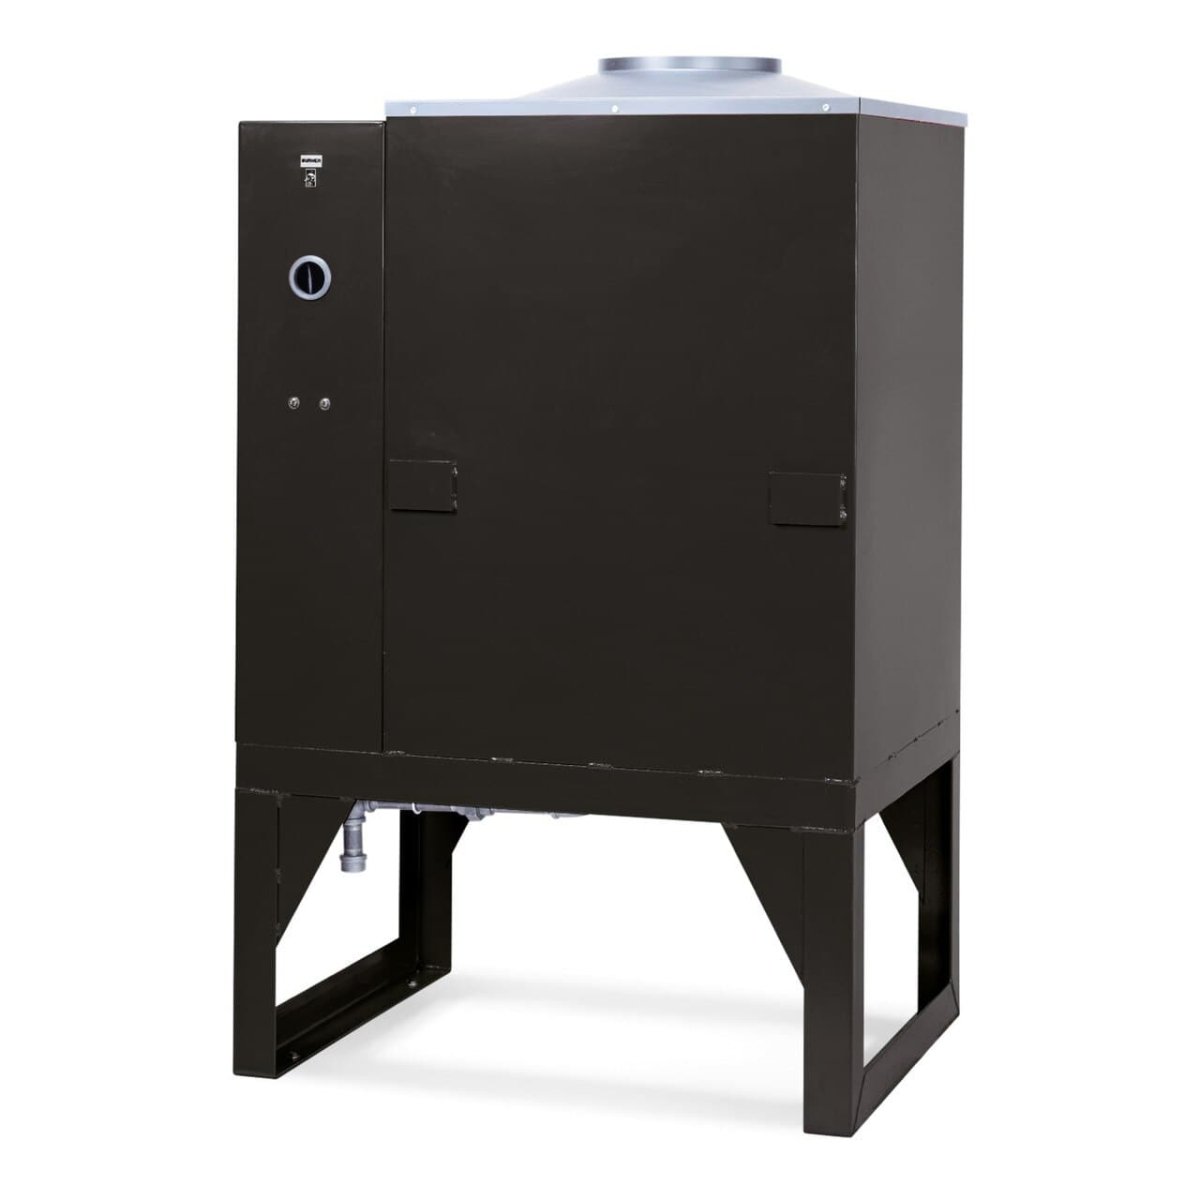 Hot Water Generator 9460 Series - Karcher